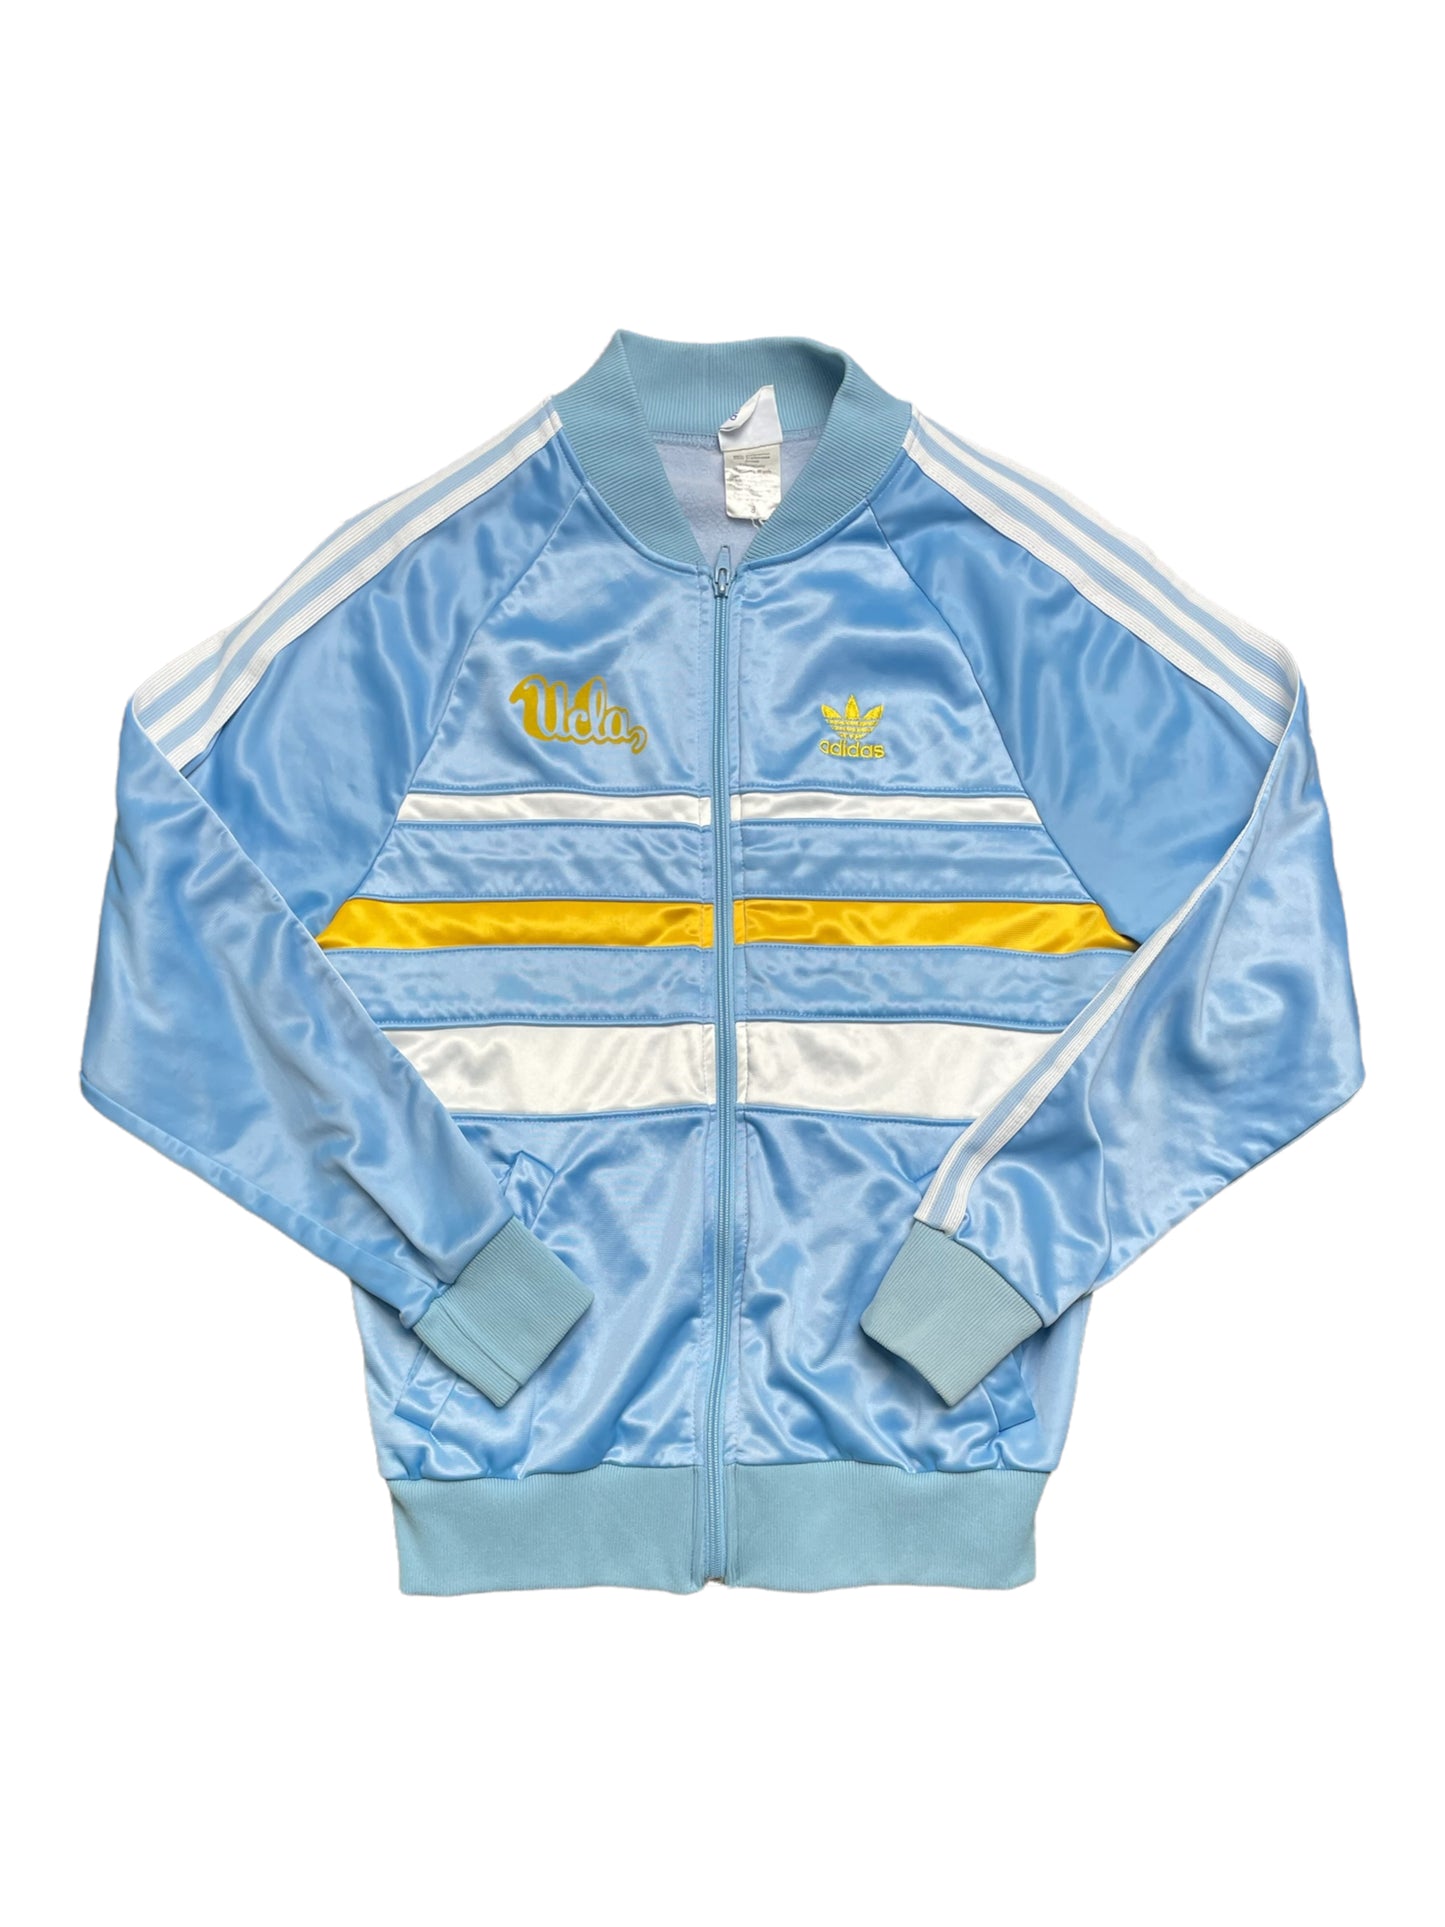 Vintage 80s University of California Los Angeles UCLA Adidas Track Jacket Small